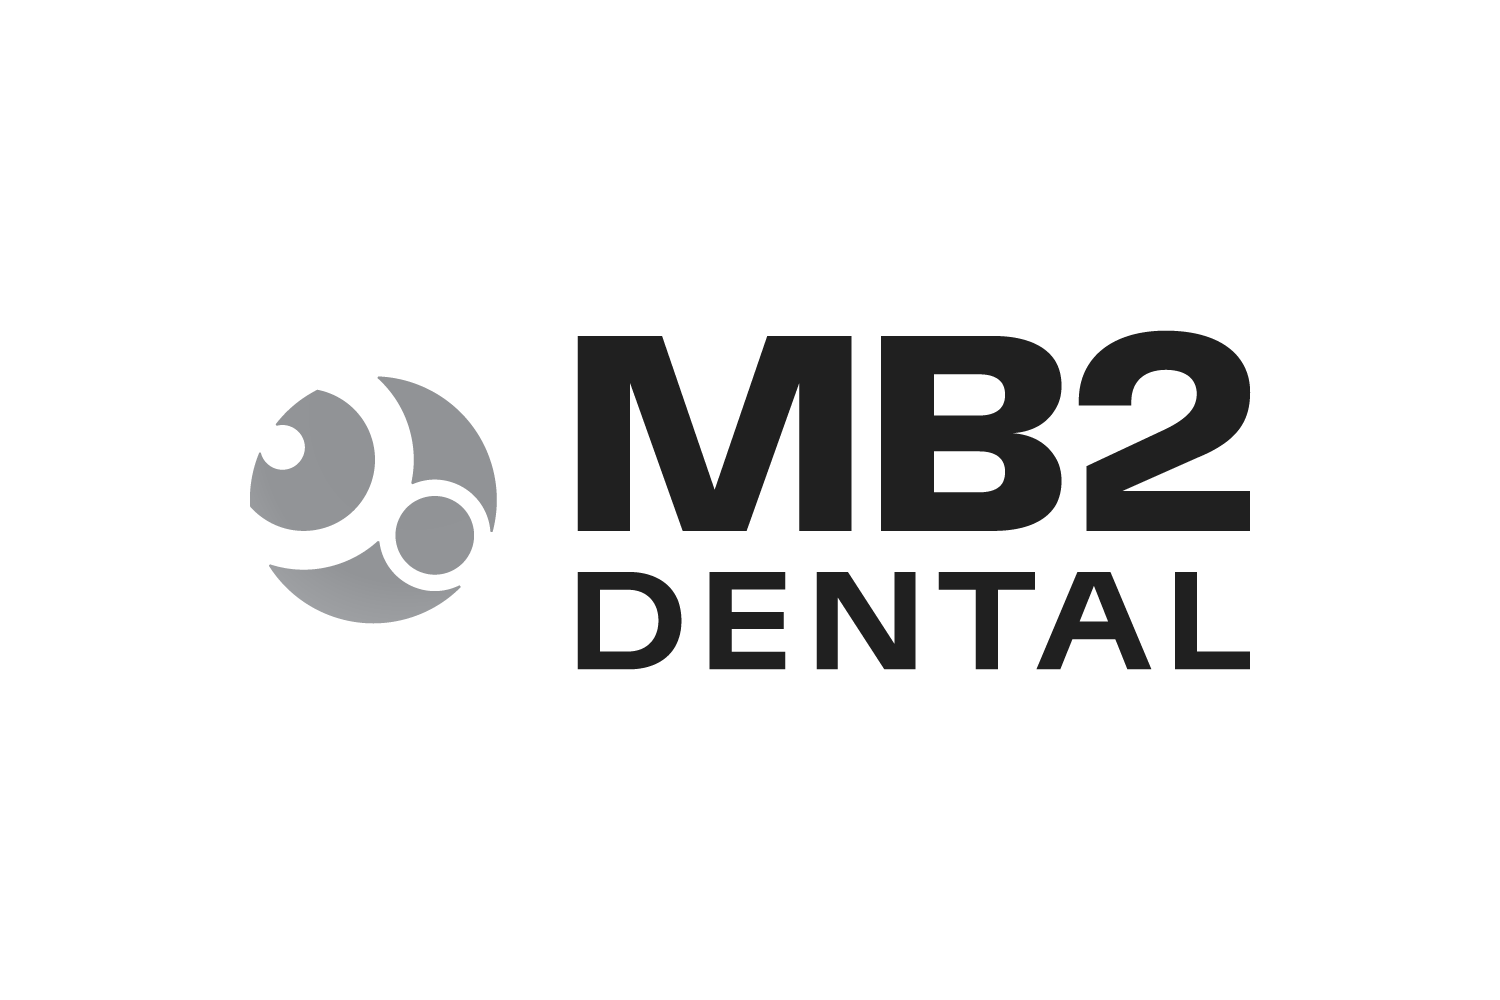 MB2 Dental logo